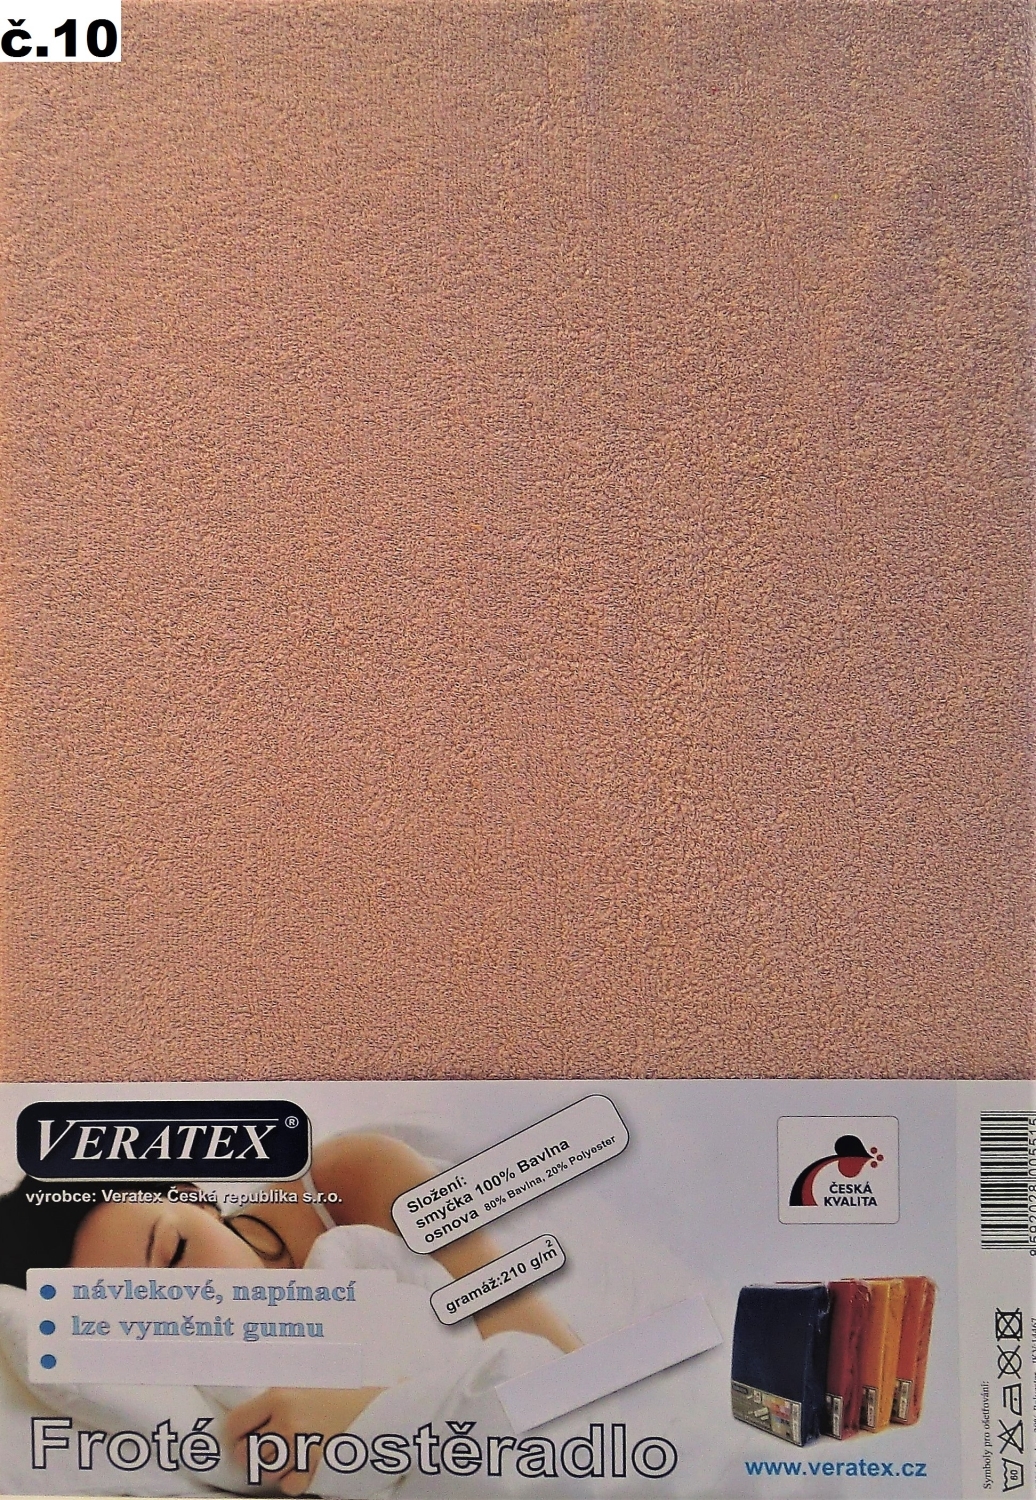 Veratex Froté prostěradlo 200 x 240 cm (č.10-starorůžová) 200 x 240 cm